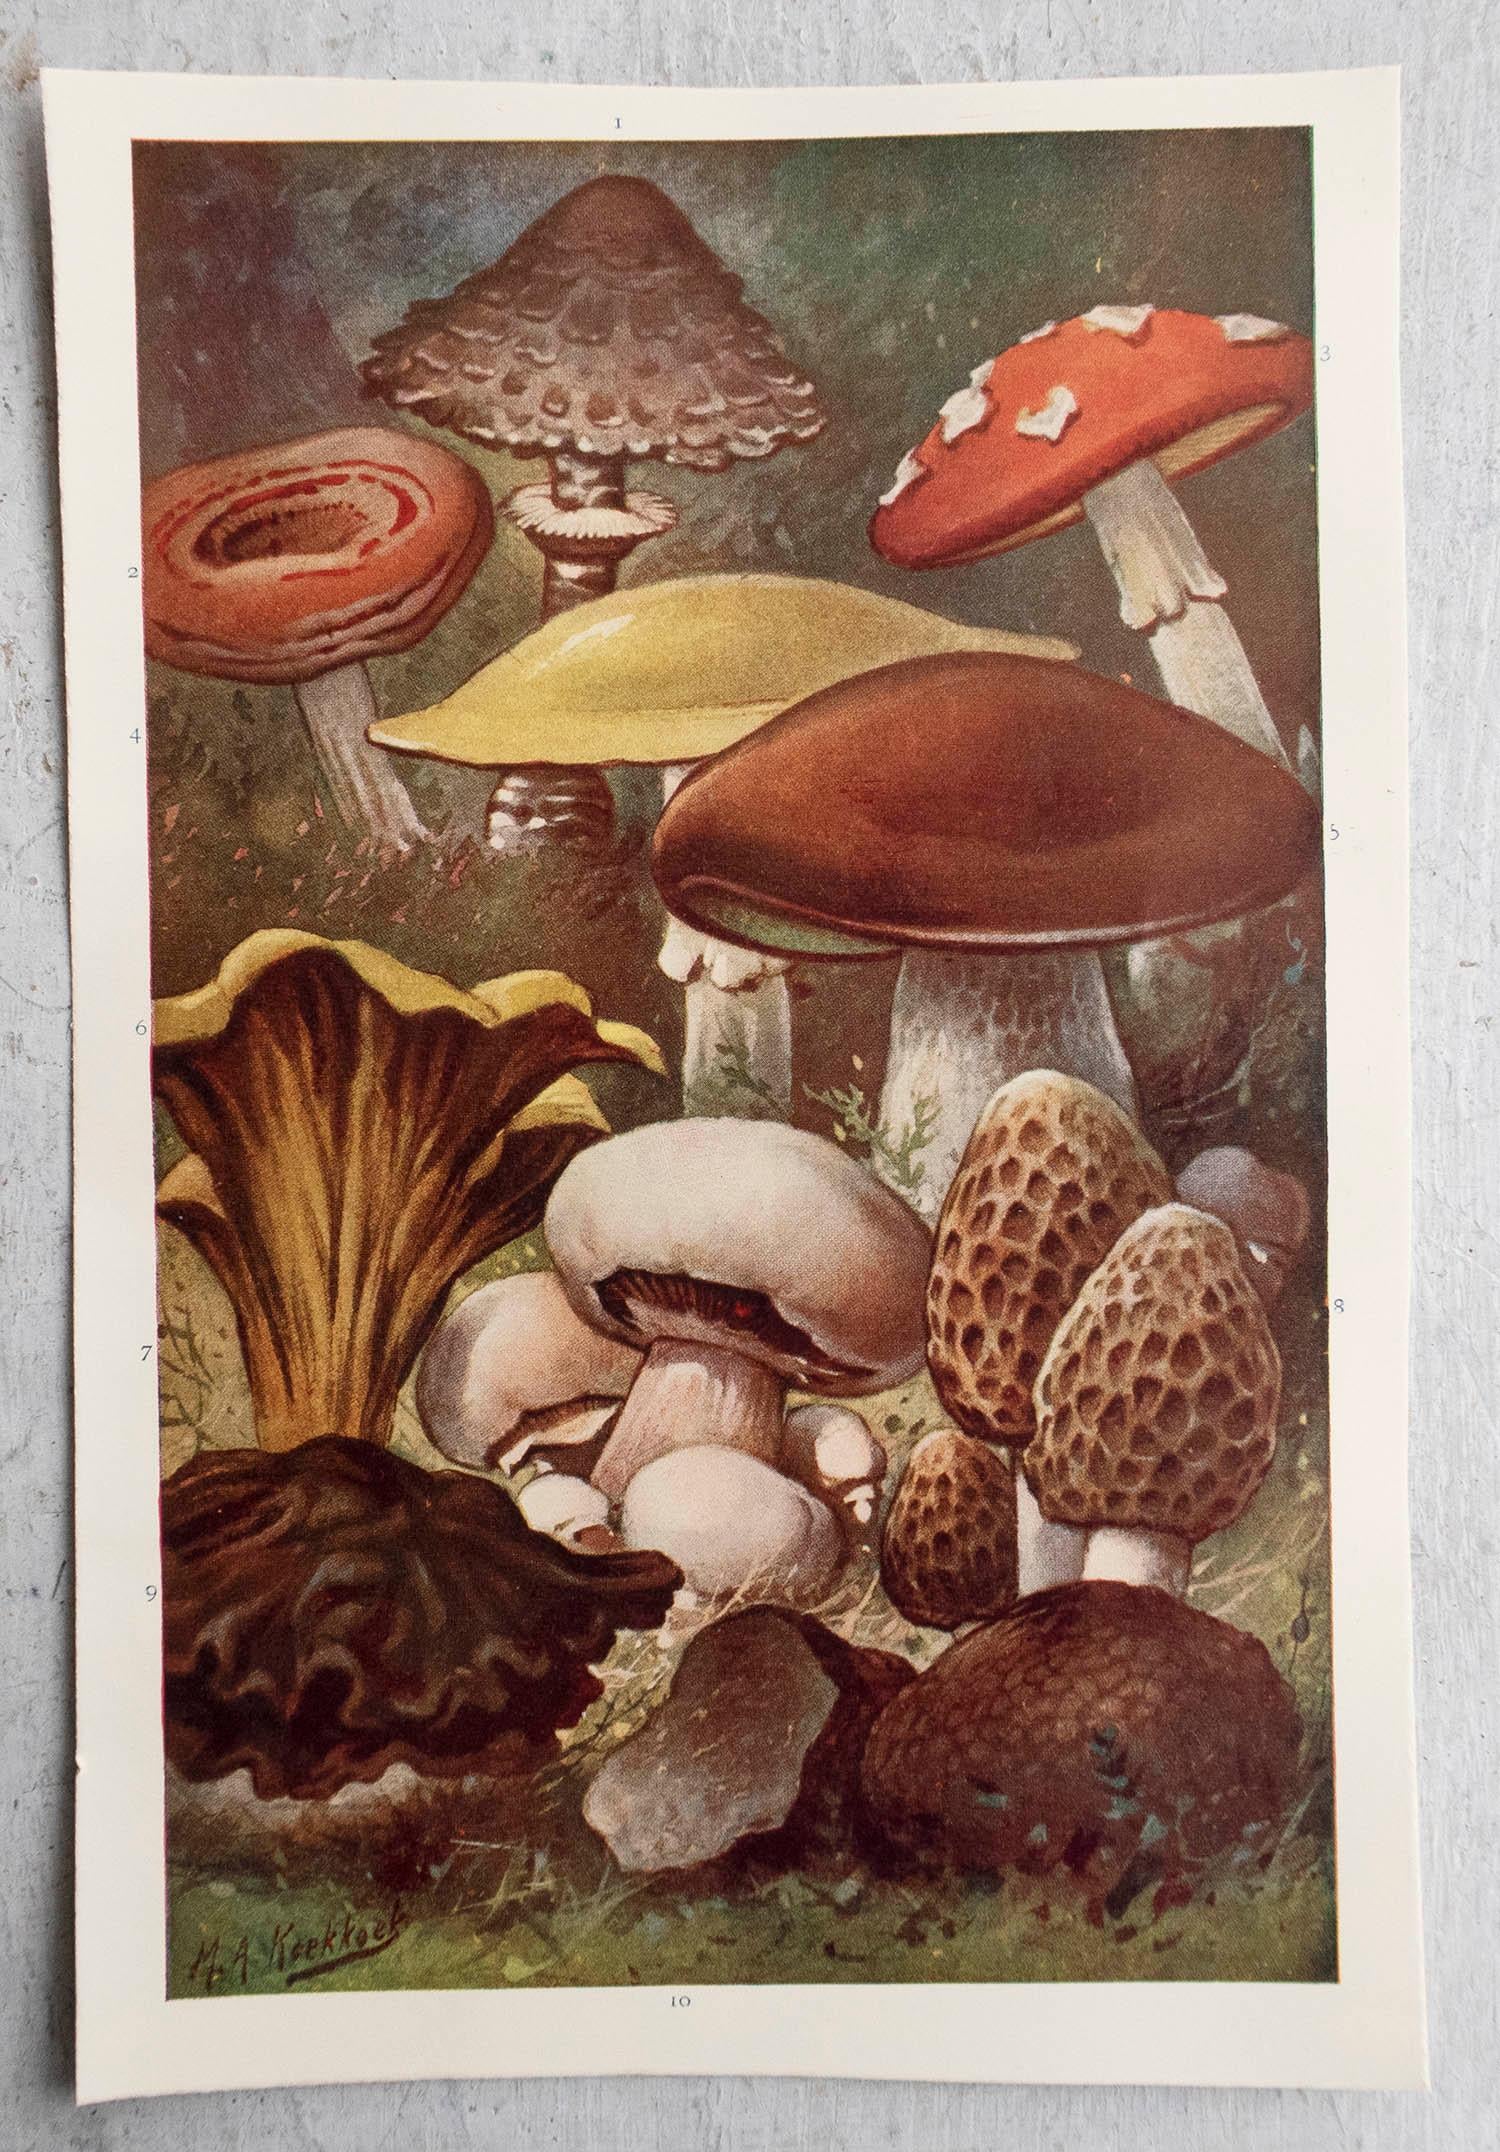 Edwardian Original Vintage Print of Mushrooms, circa 1900